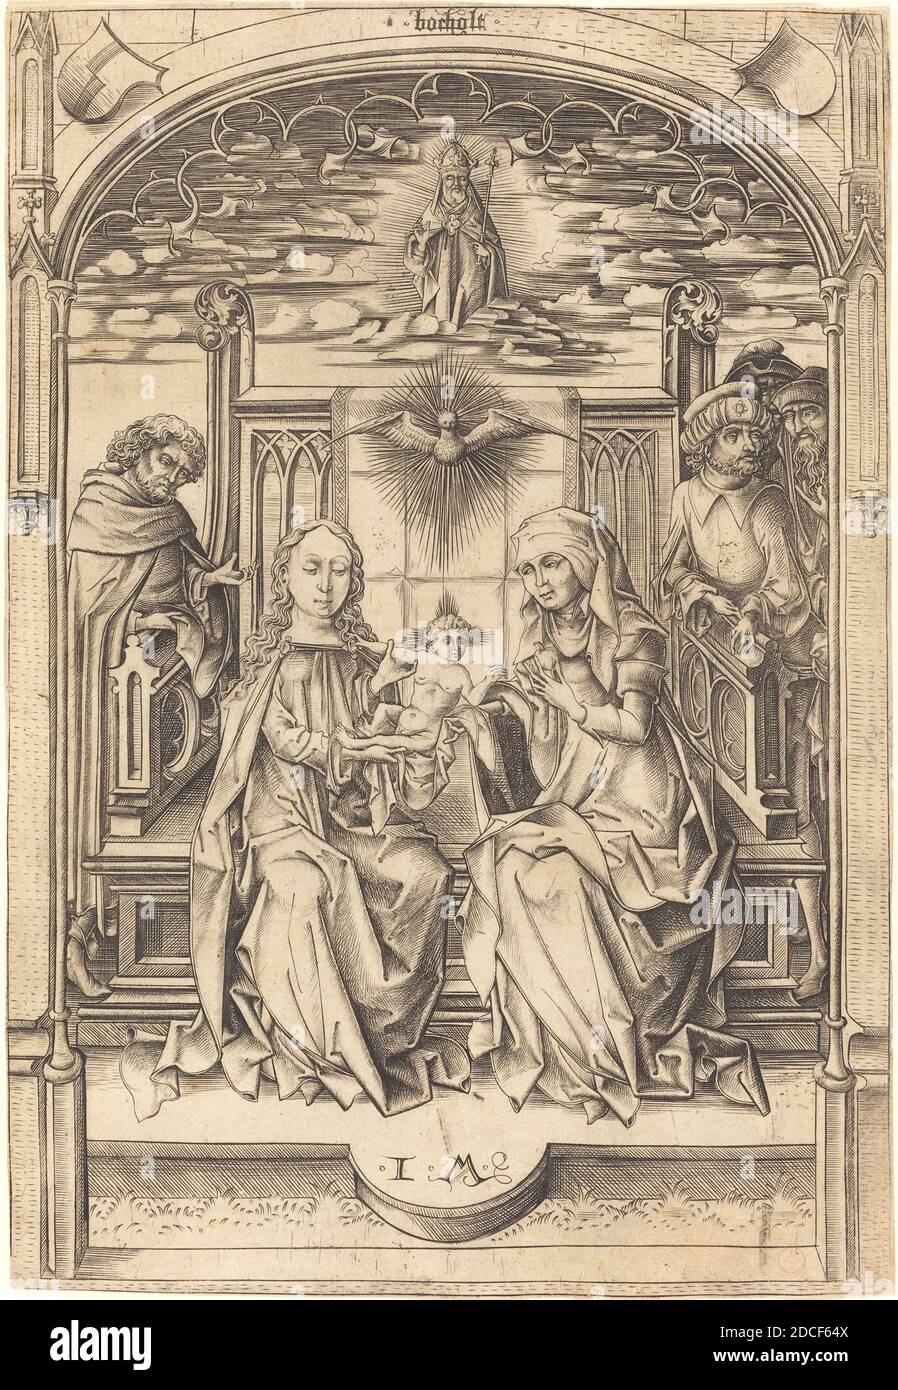 Israhel van Meckenem, (artist), German, c. 1445 - 1503, The Holy Family, c. 1475/1480, engraving Stock Photo